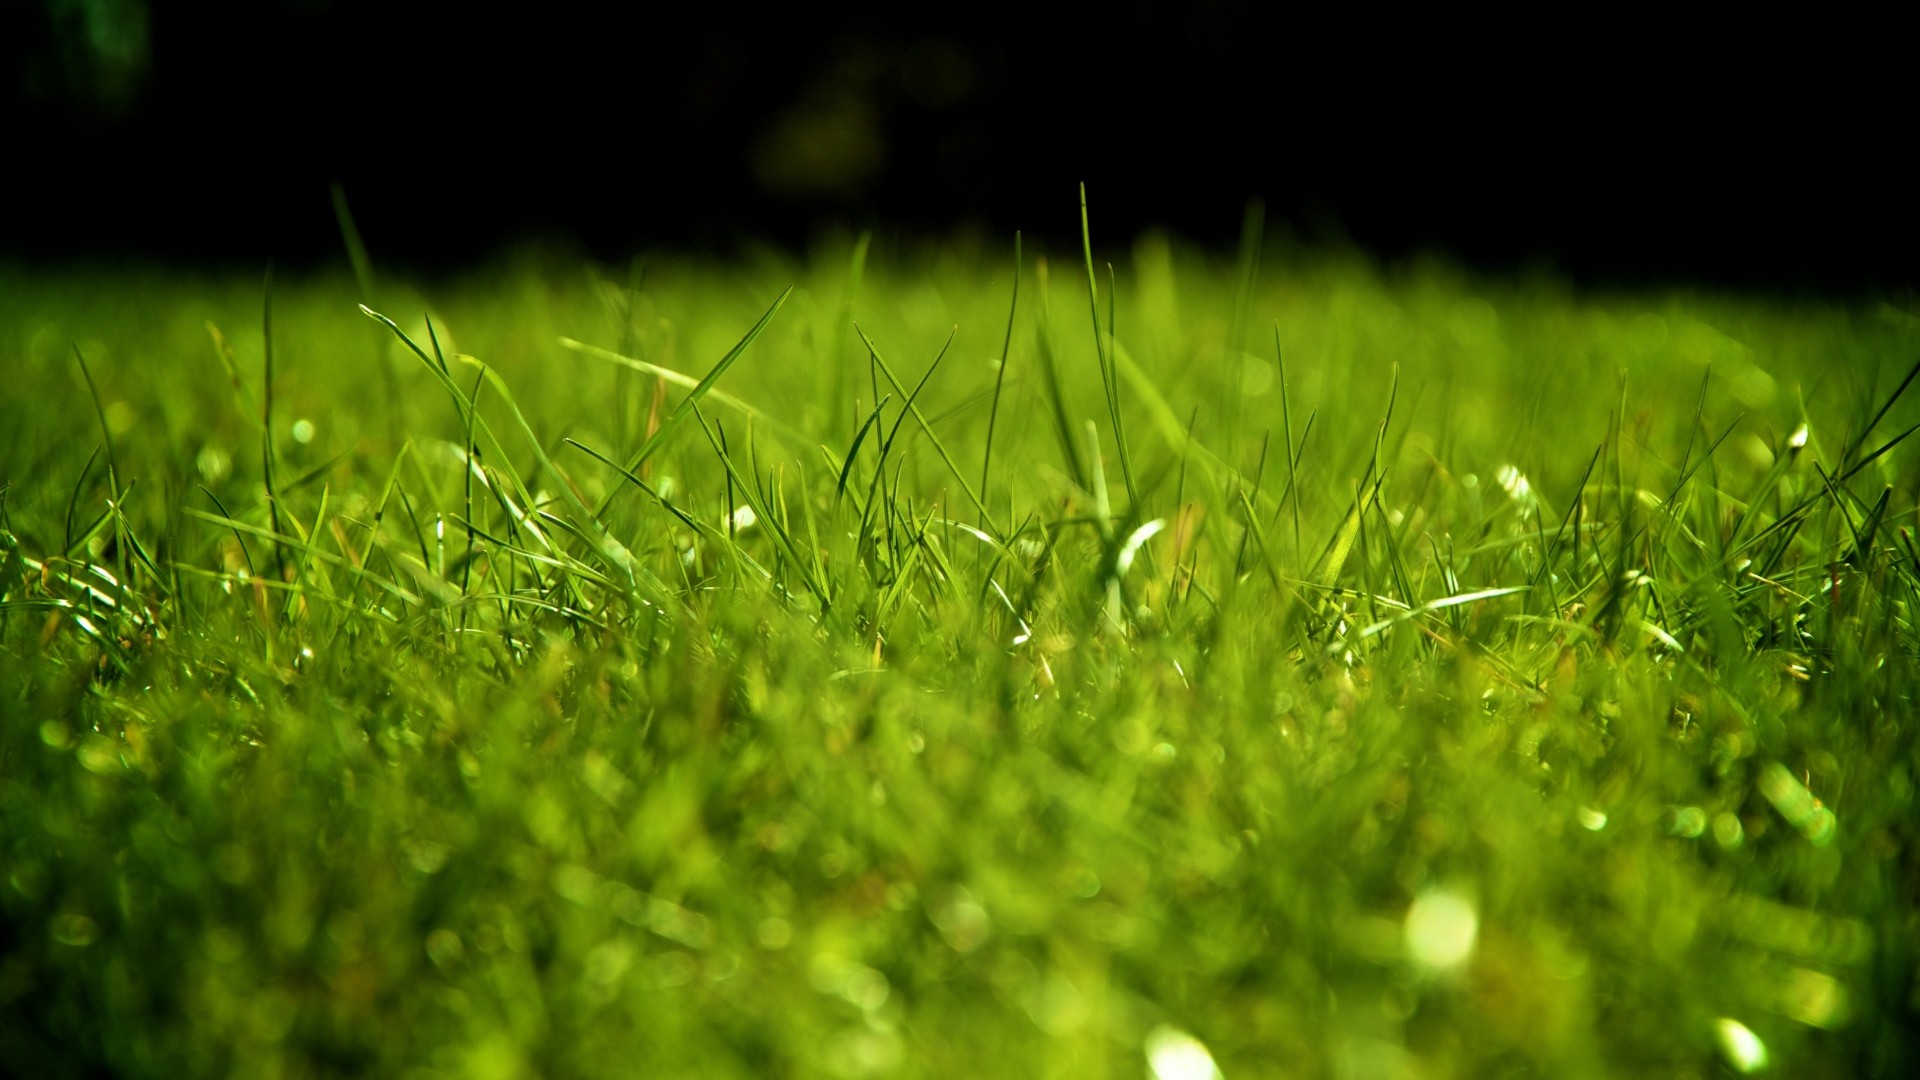 1920x1080 Download now full hd wallpaper grass field green blurry ...